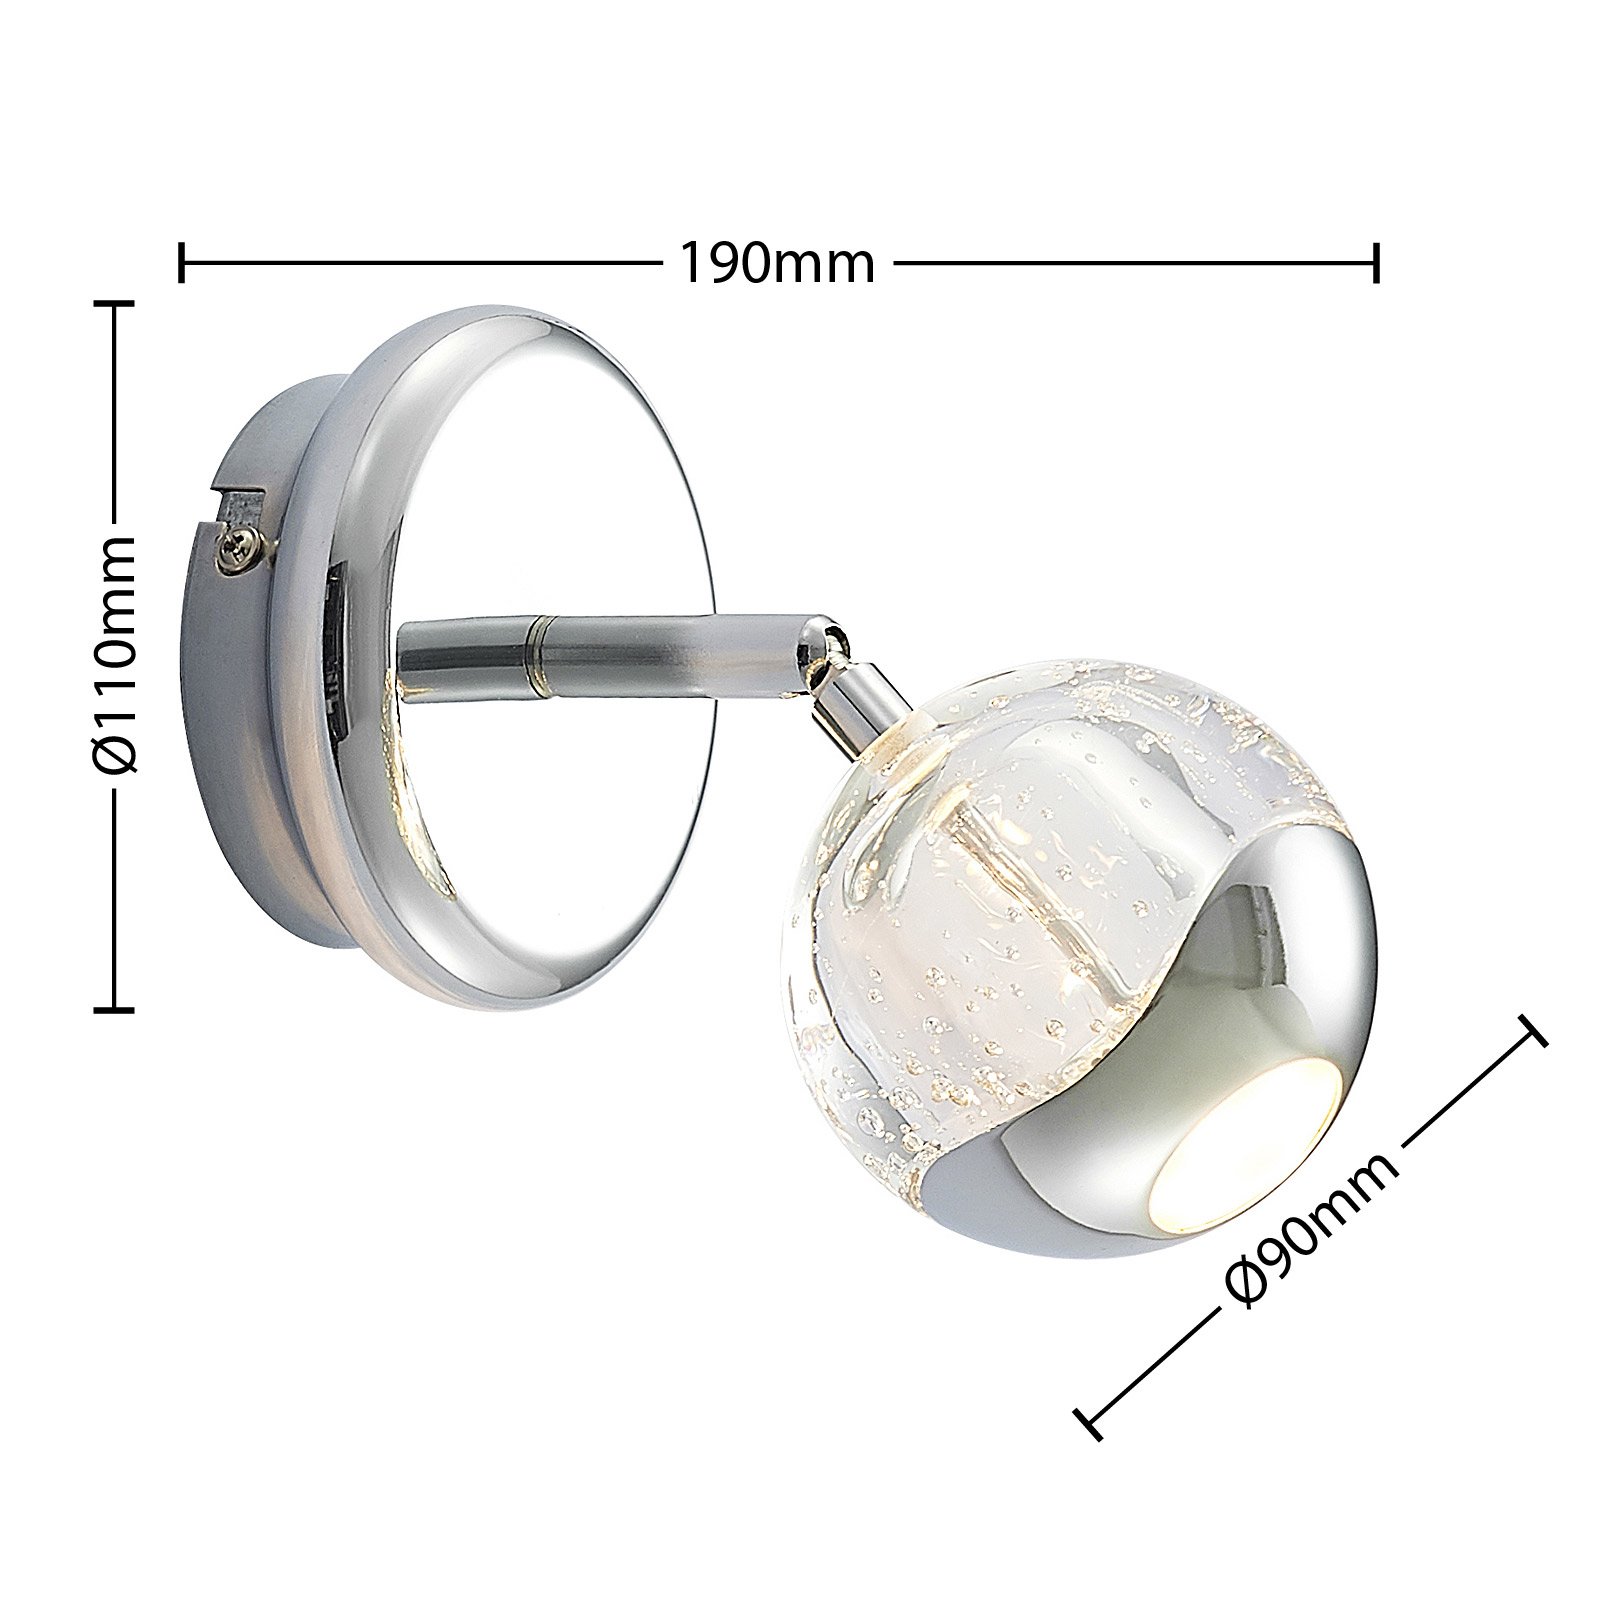 Lucande Kilio LED-spot üveg ernyővel, króm